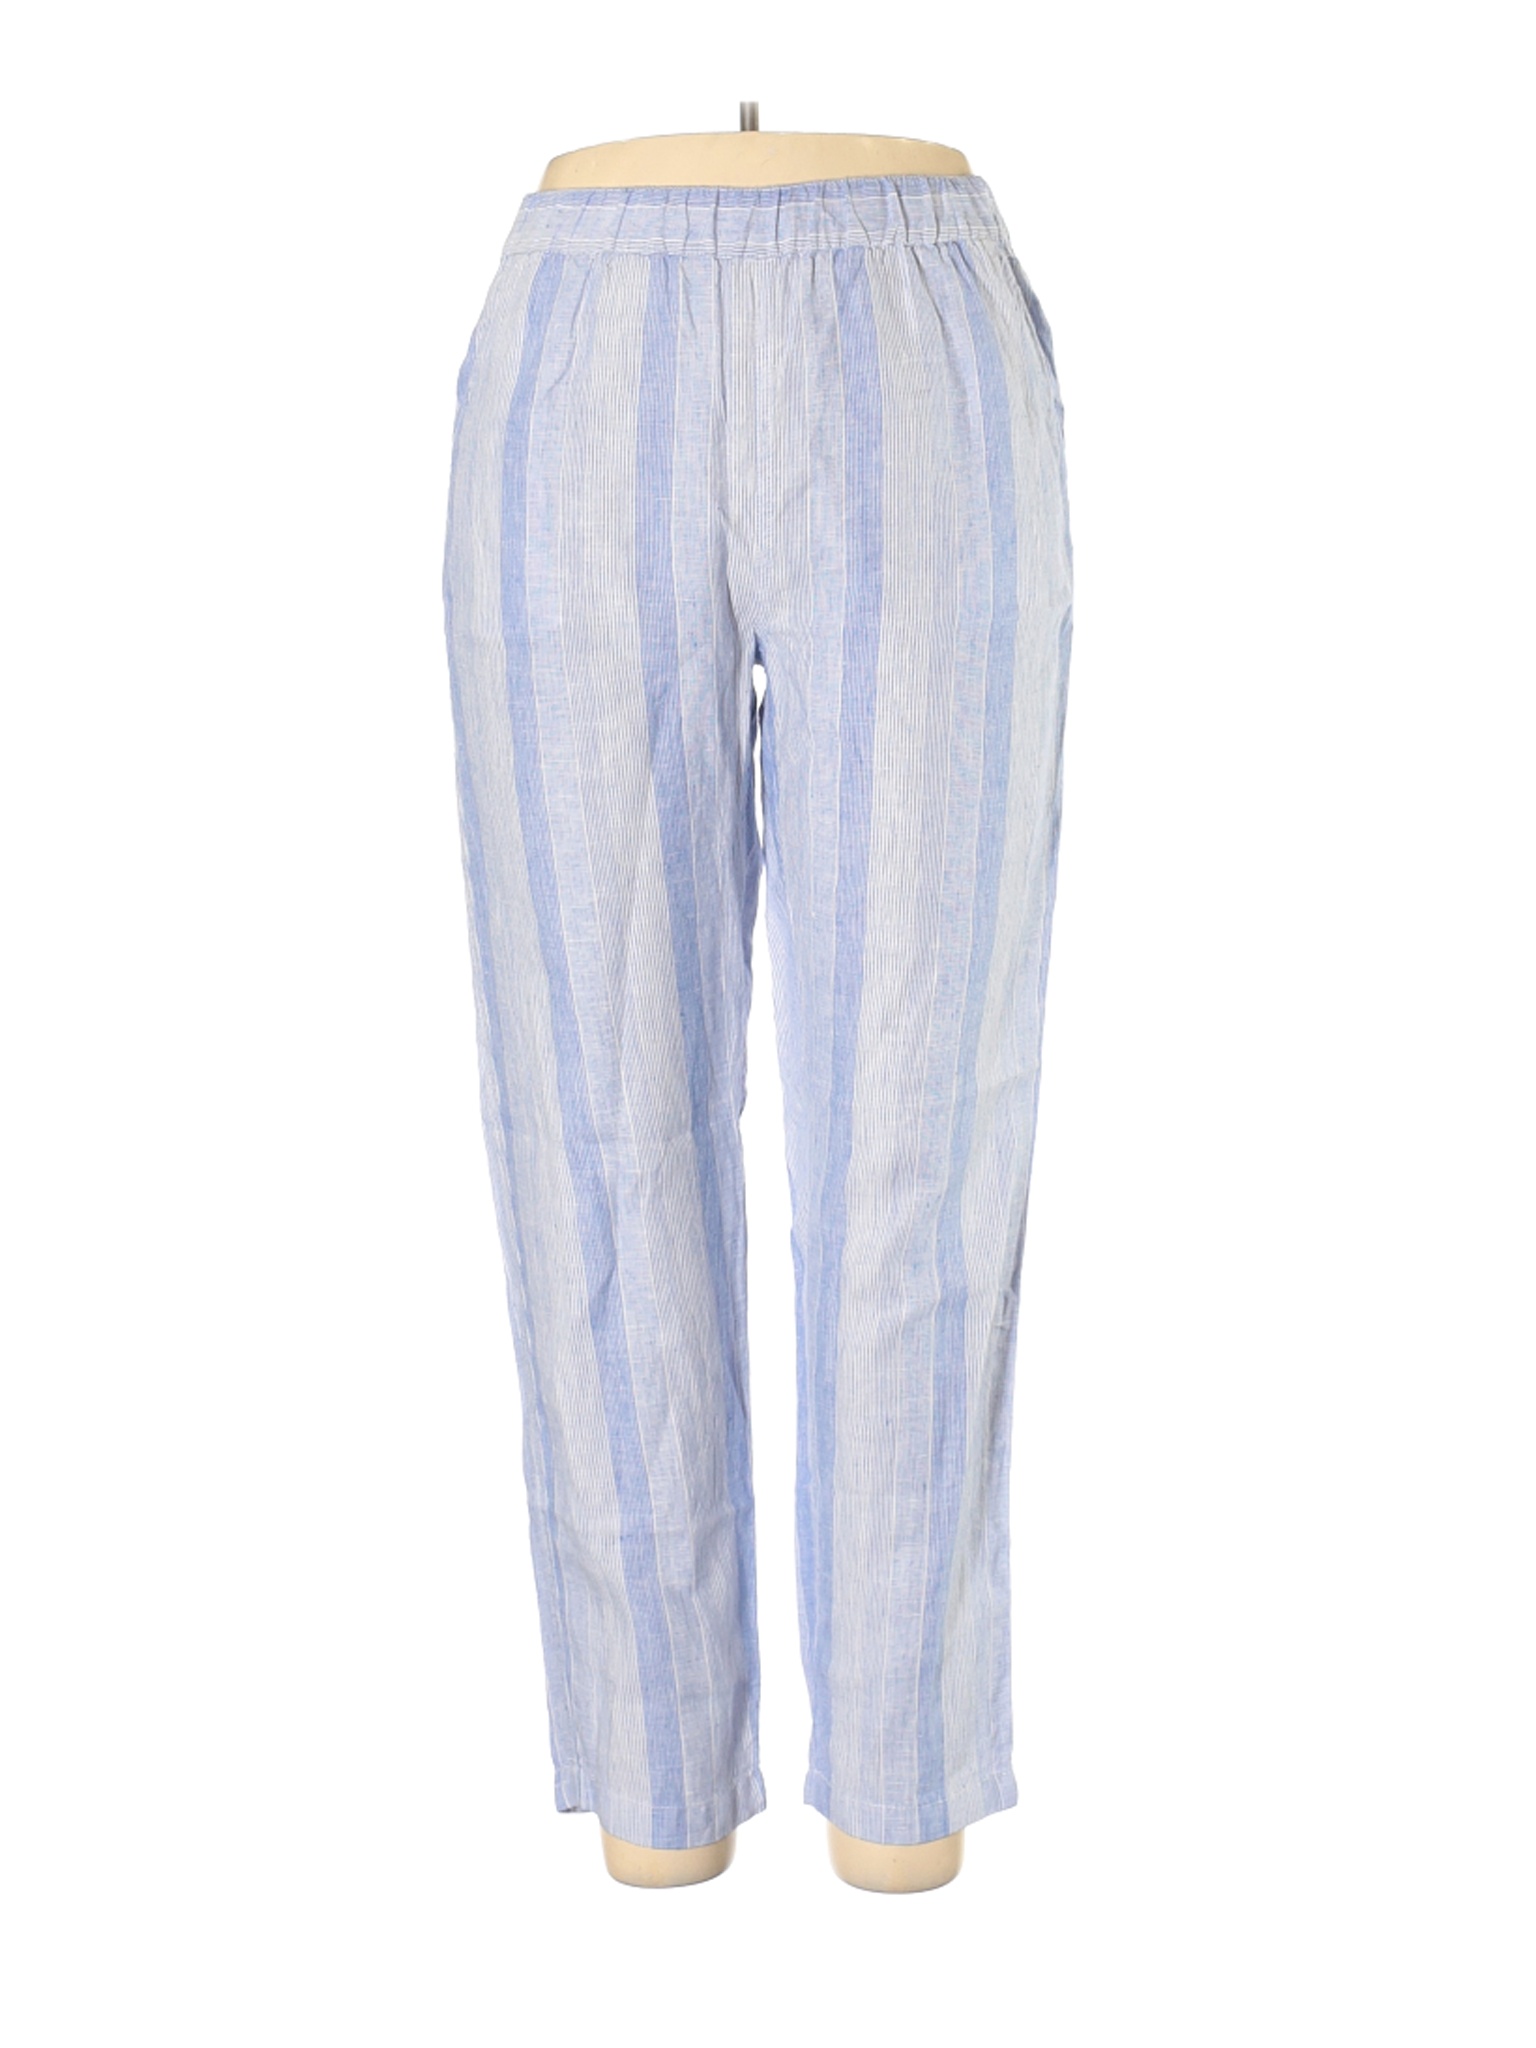 C&C California Women Blue Linen Pants M | eBay